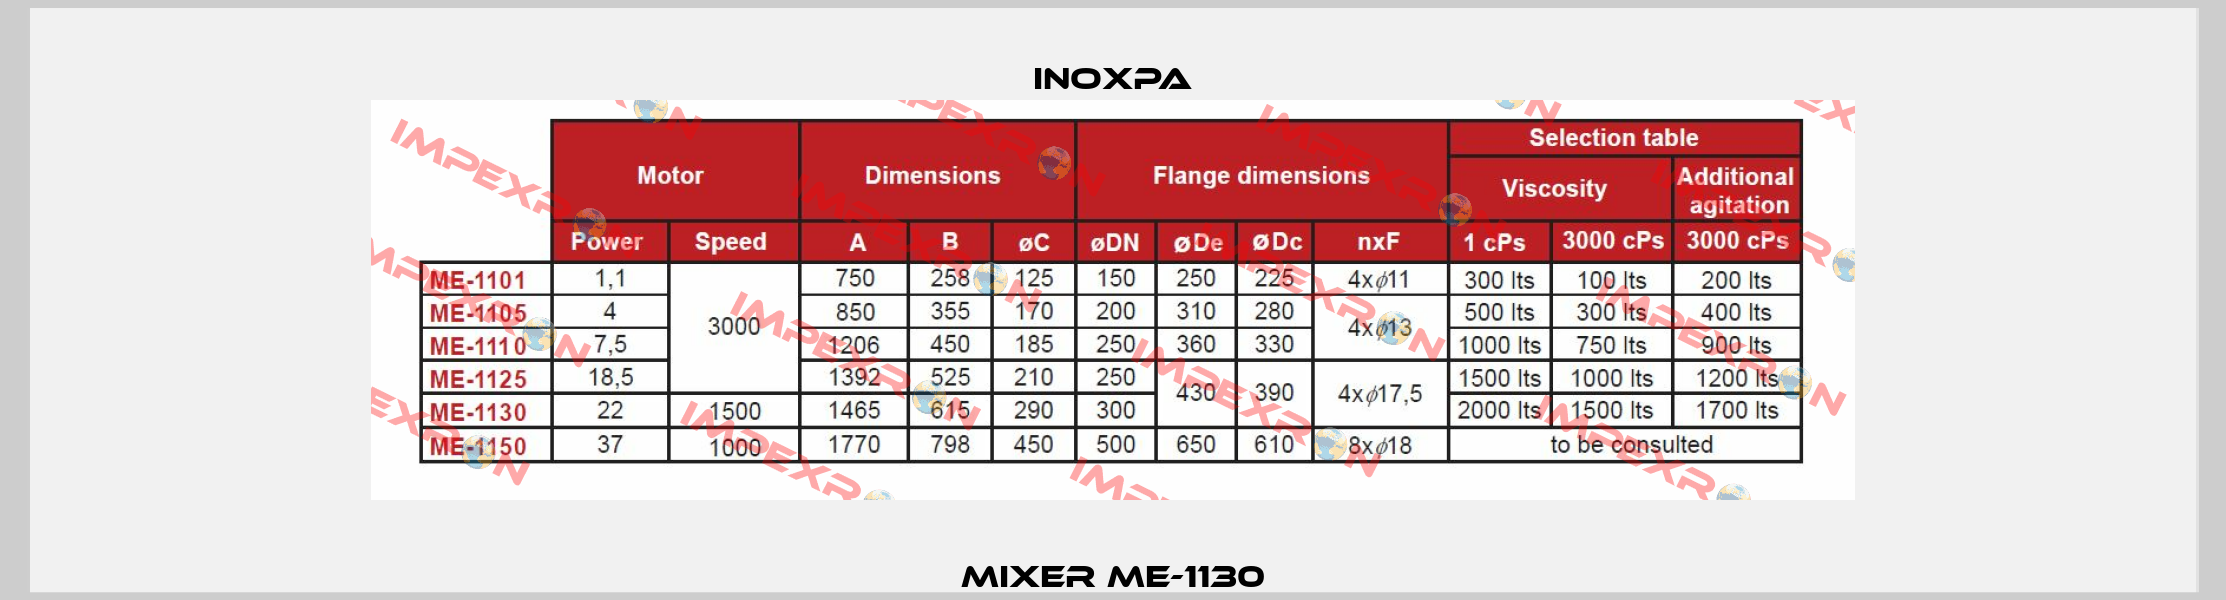 MIXER ME-1130 Inoxpa